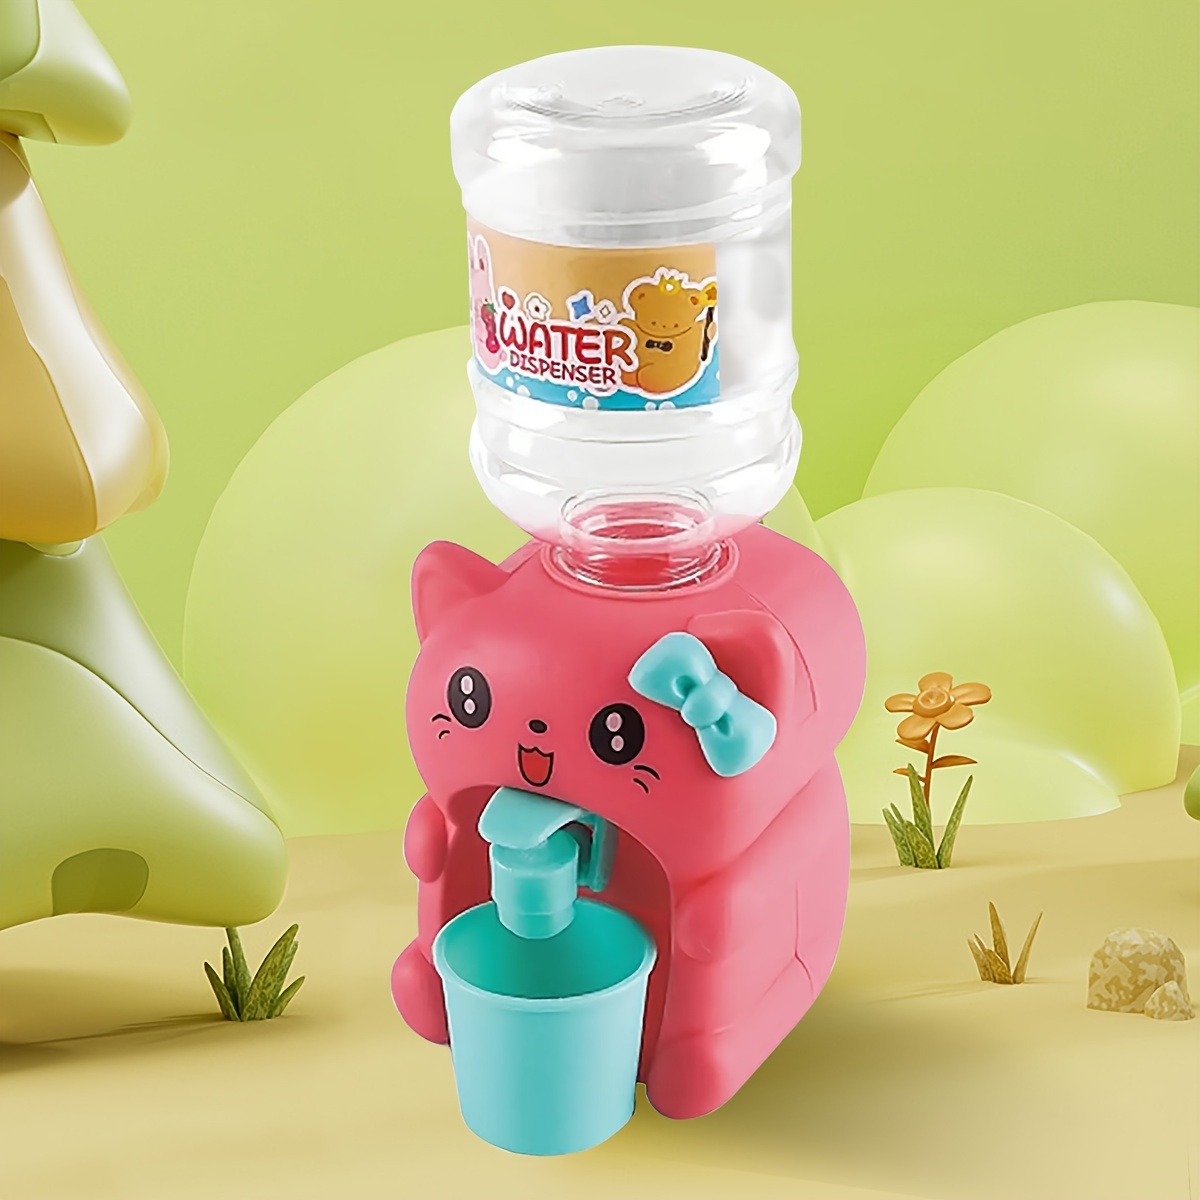 

1pc Cute Mini Water Dispenser Toy For Kids - Fun Simulation Cartoon Kitchen Playset